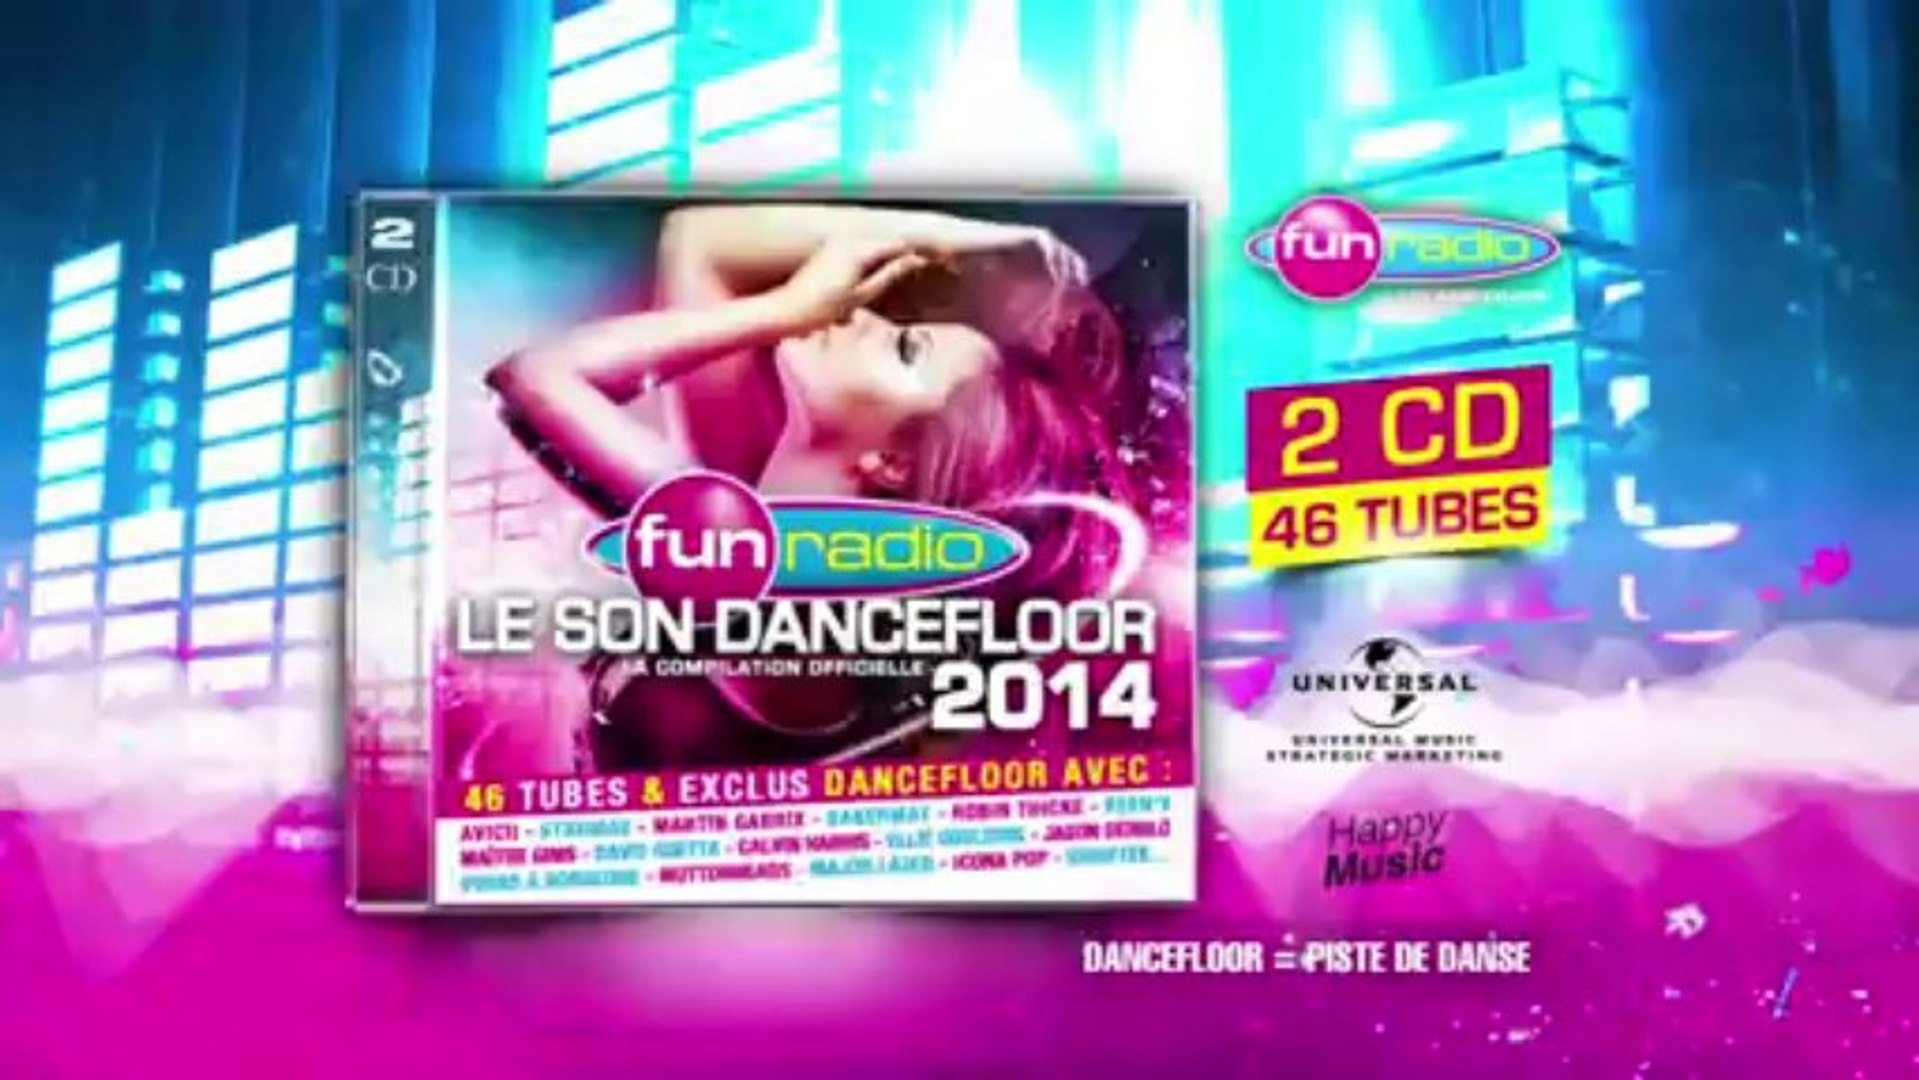 Le Son Dancefloor 2014 - Vidéo Dailymotion